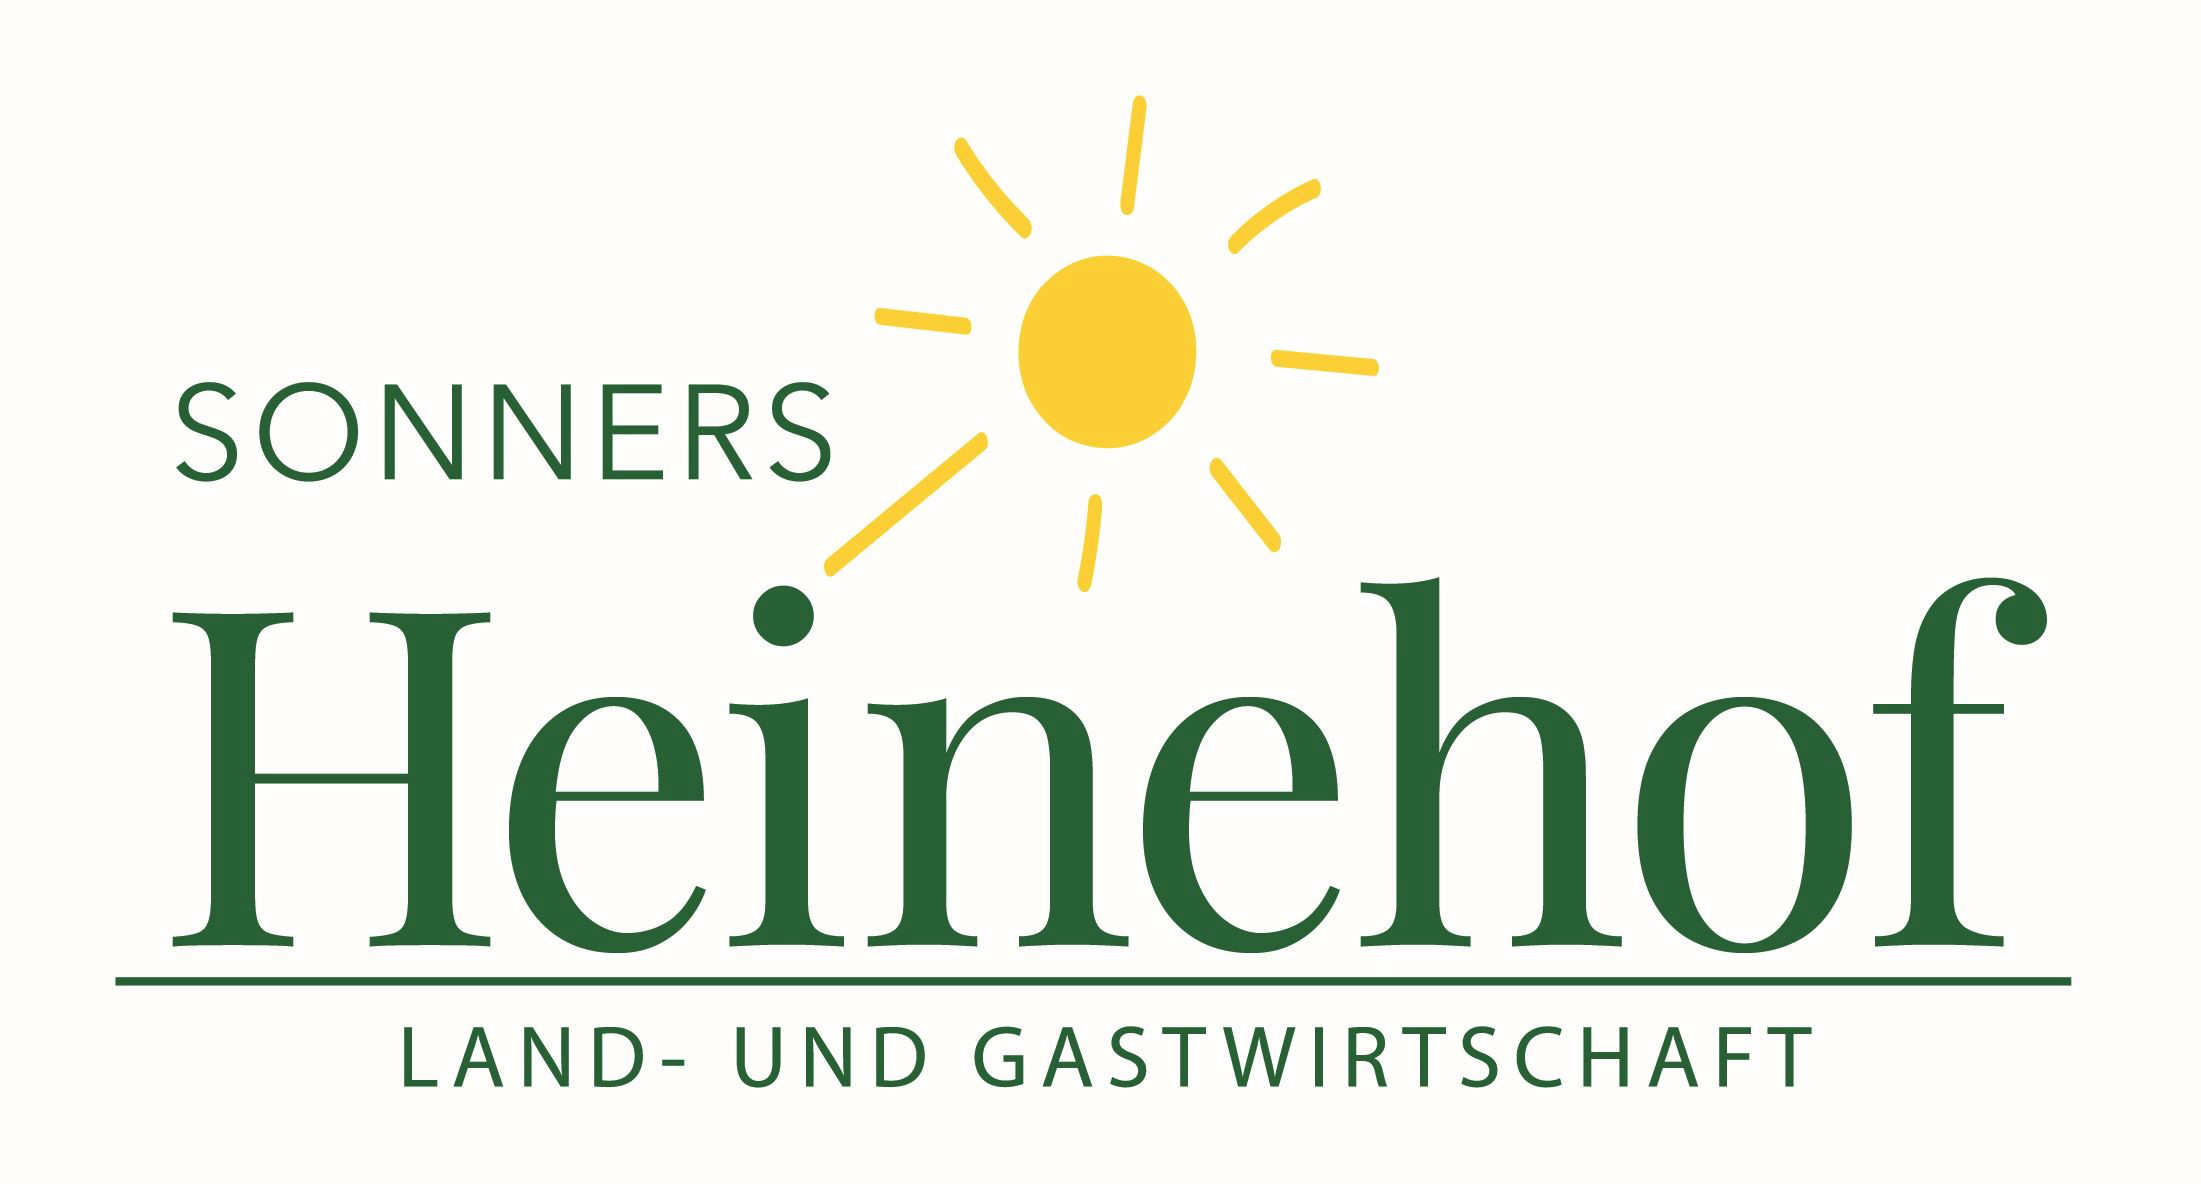 Sonners Heinehof logo